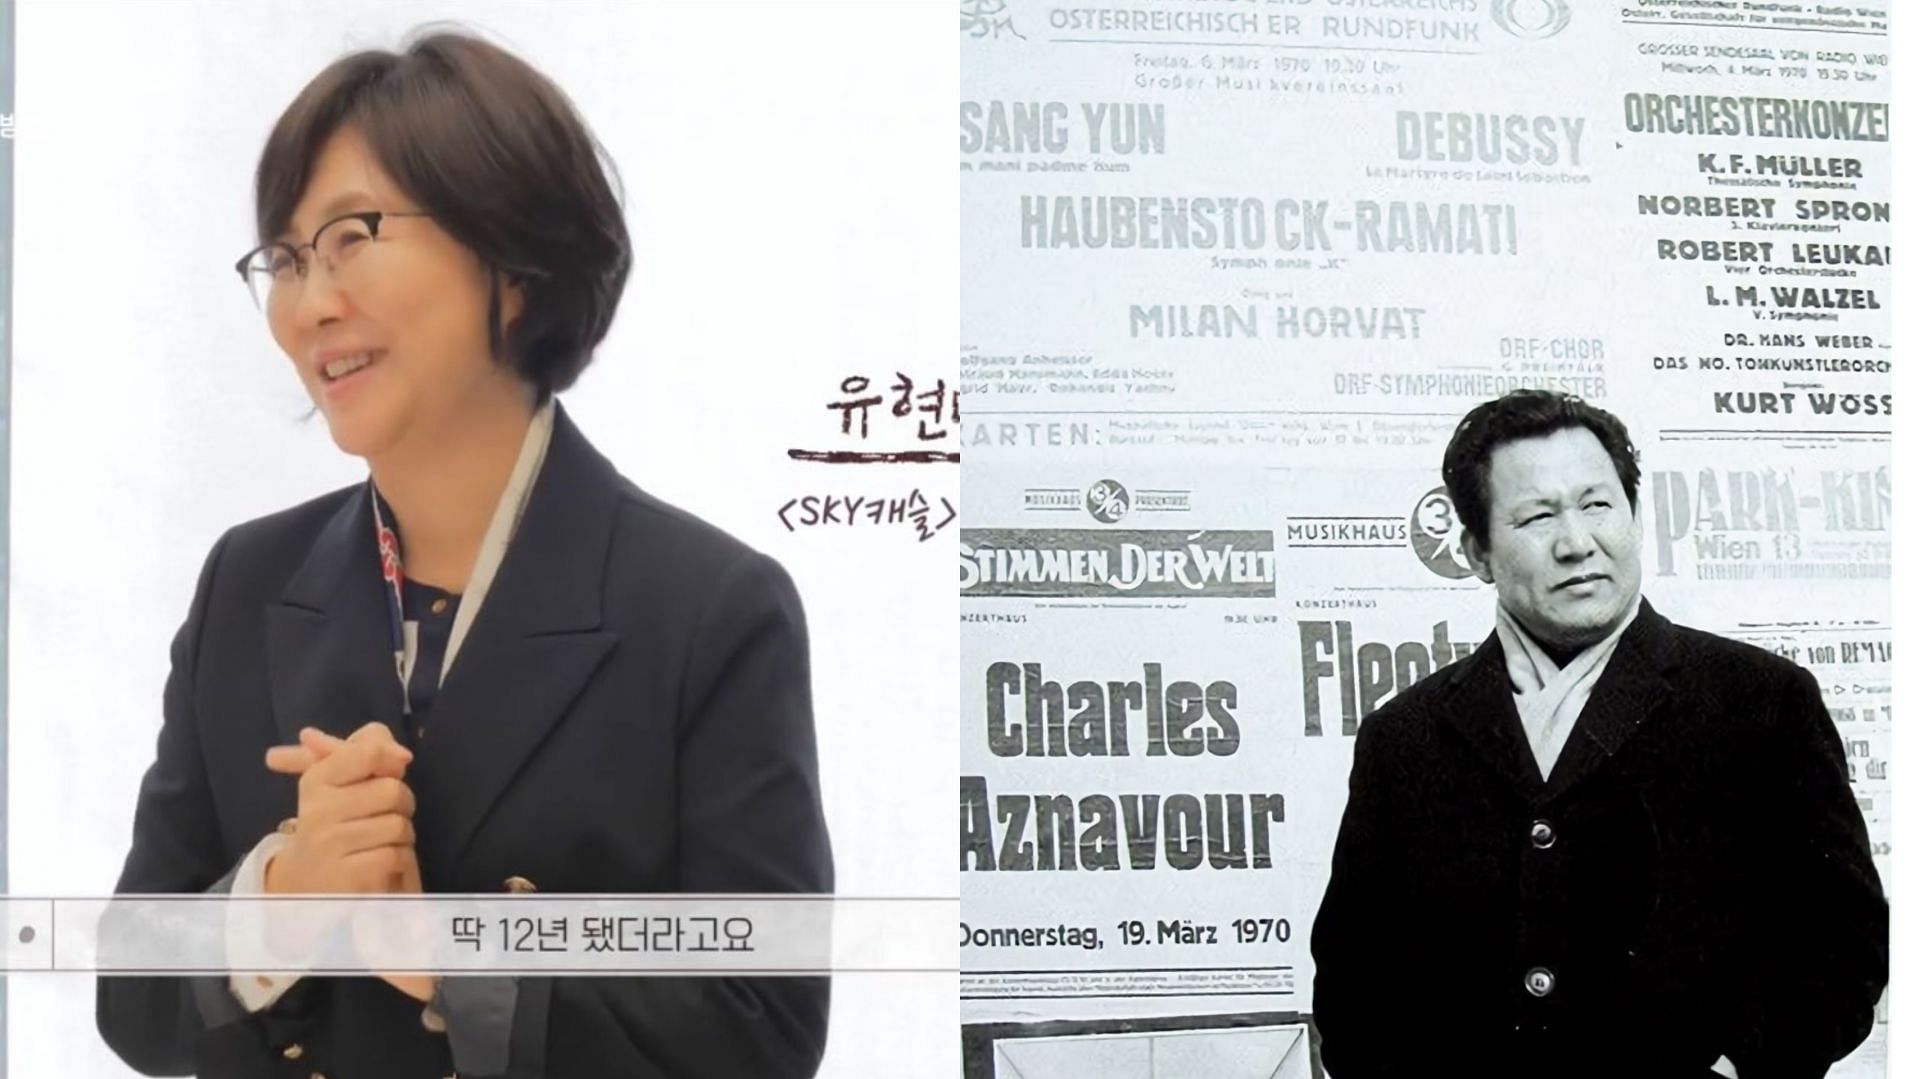 Yoo Hyun Mi (left) has written Skycastle in the past. (Image via JTBC/Chosun)